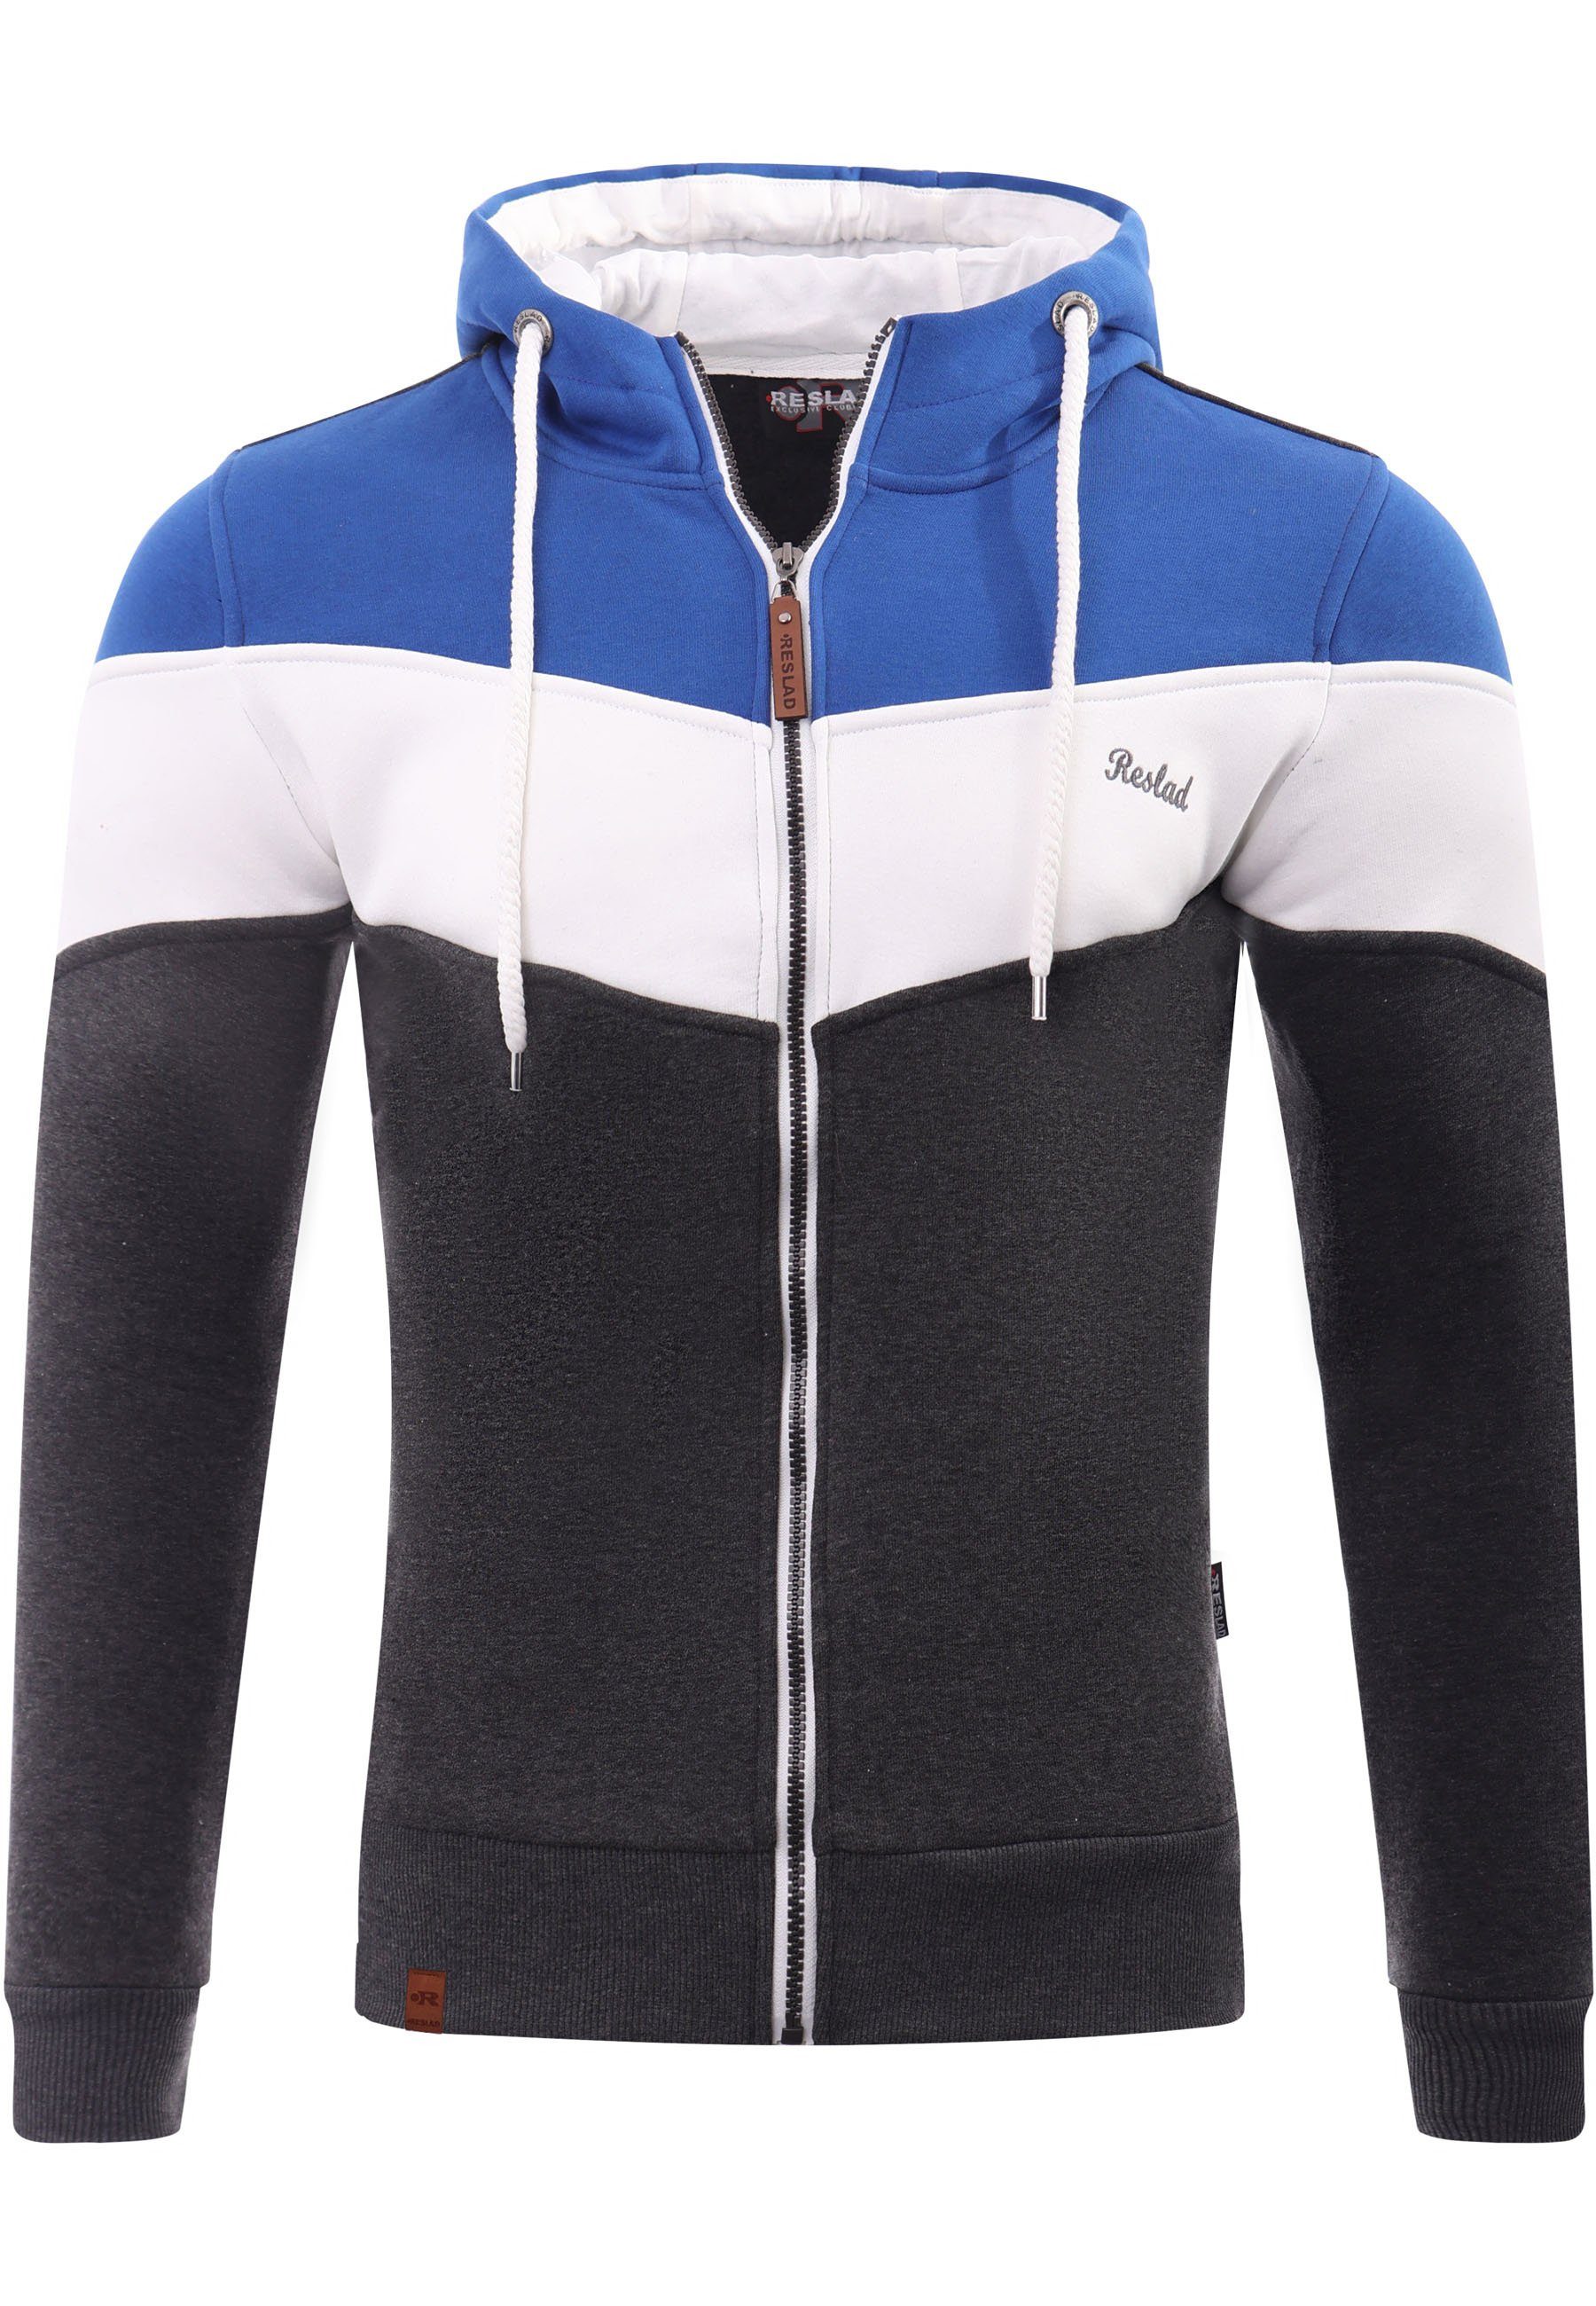 Hoodie Winter-Pullover (1-tlg) Sweatshirt blau-schwarz Sweater Sweatjacke Reslad Zipper Sweatjacke Kapuzenpullover Pulli Reslad RS-1007